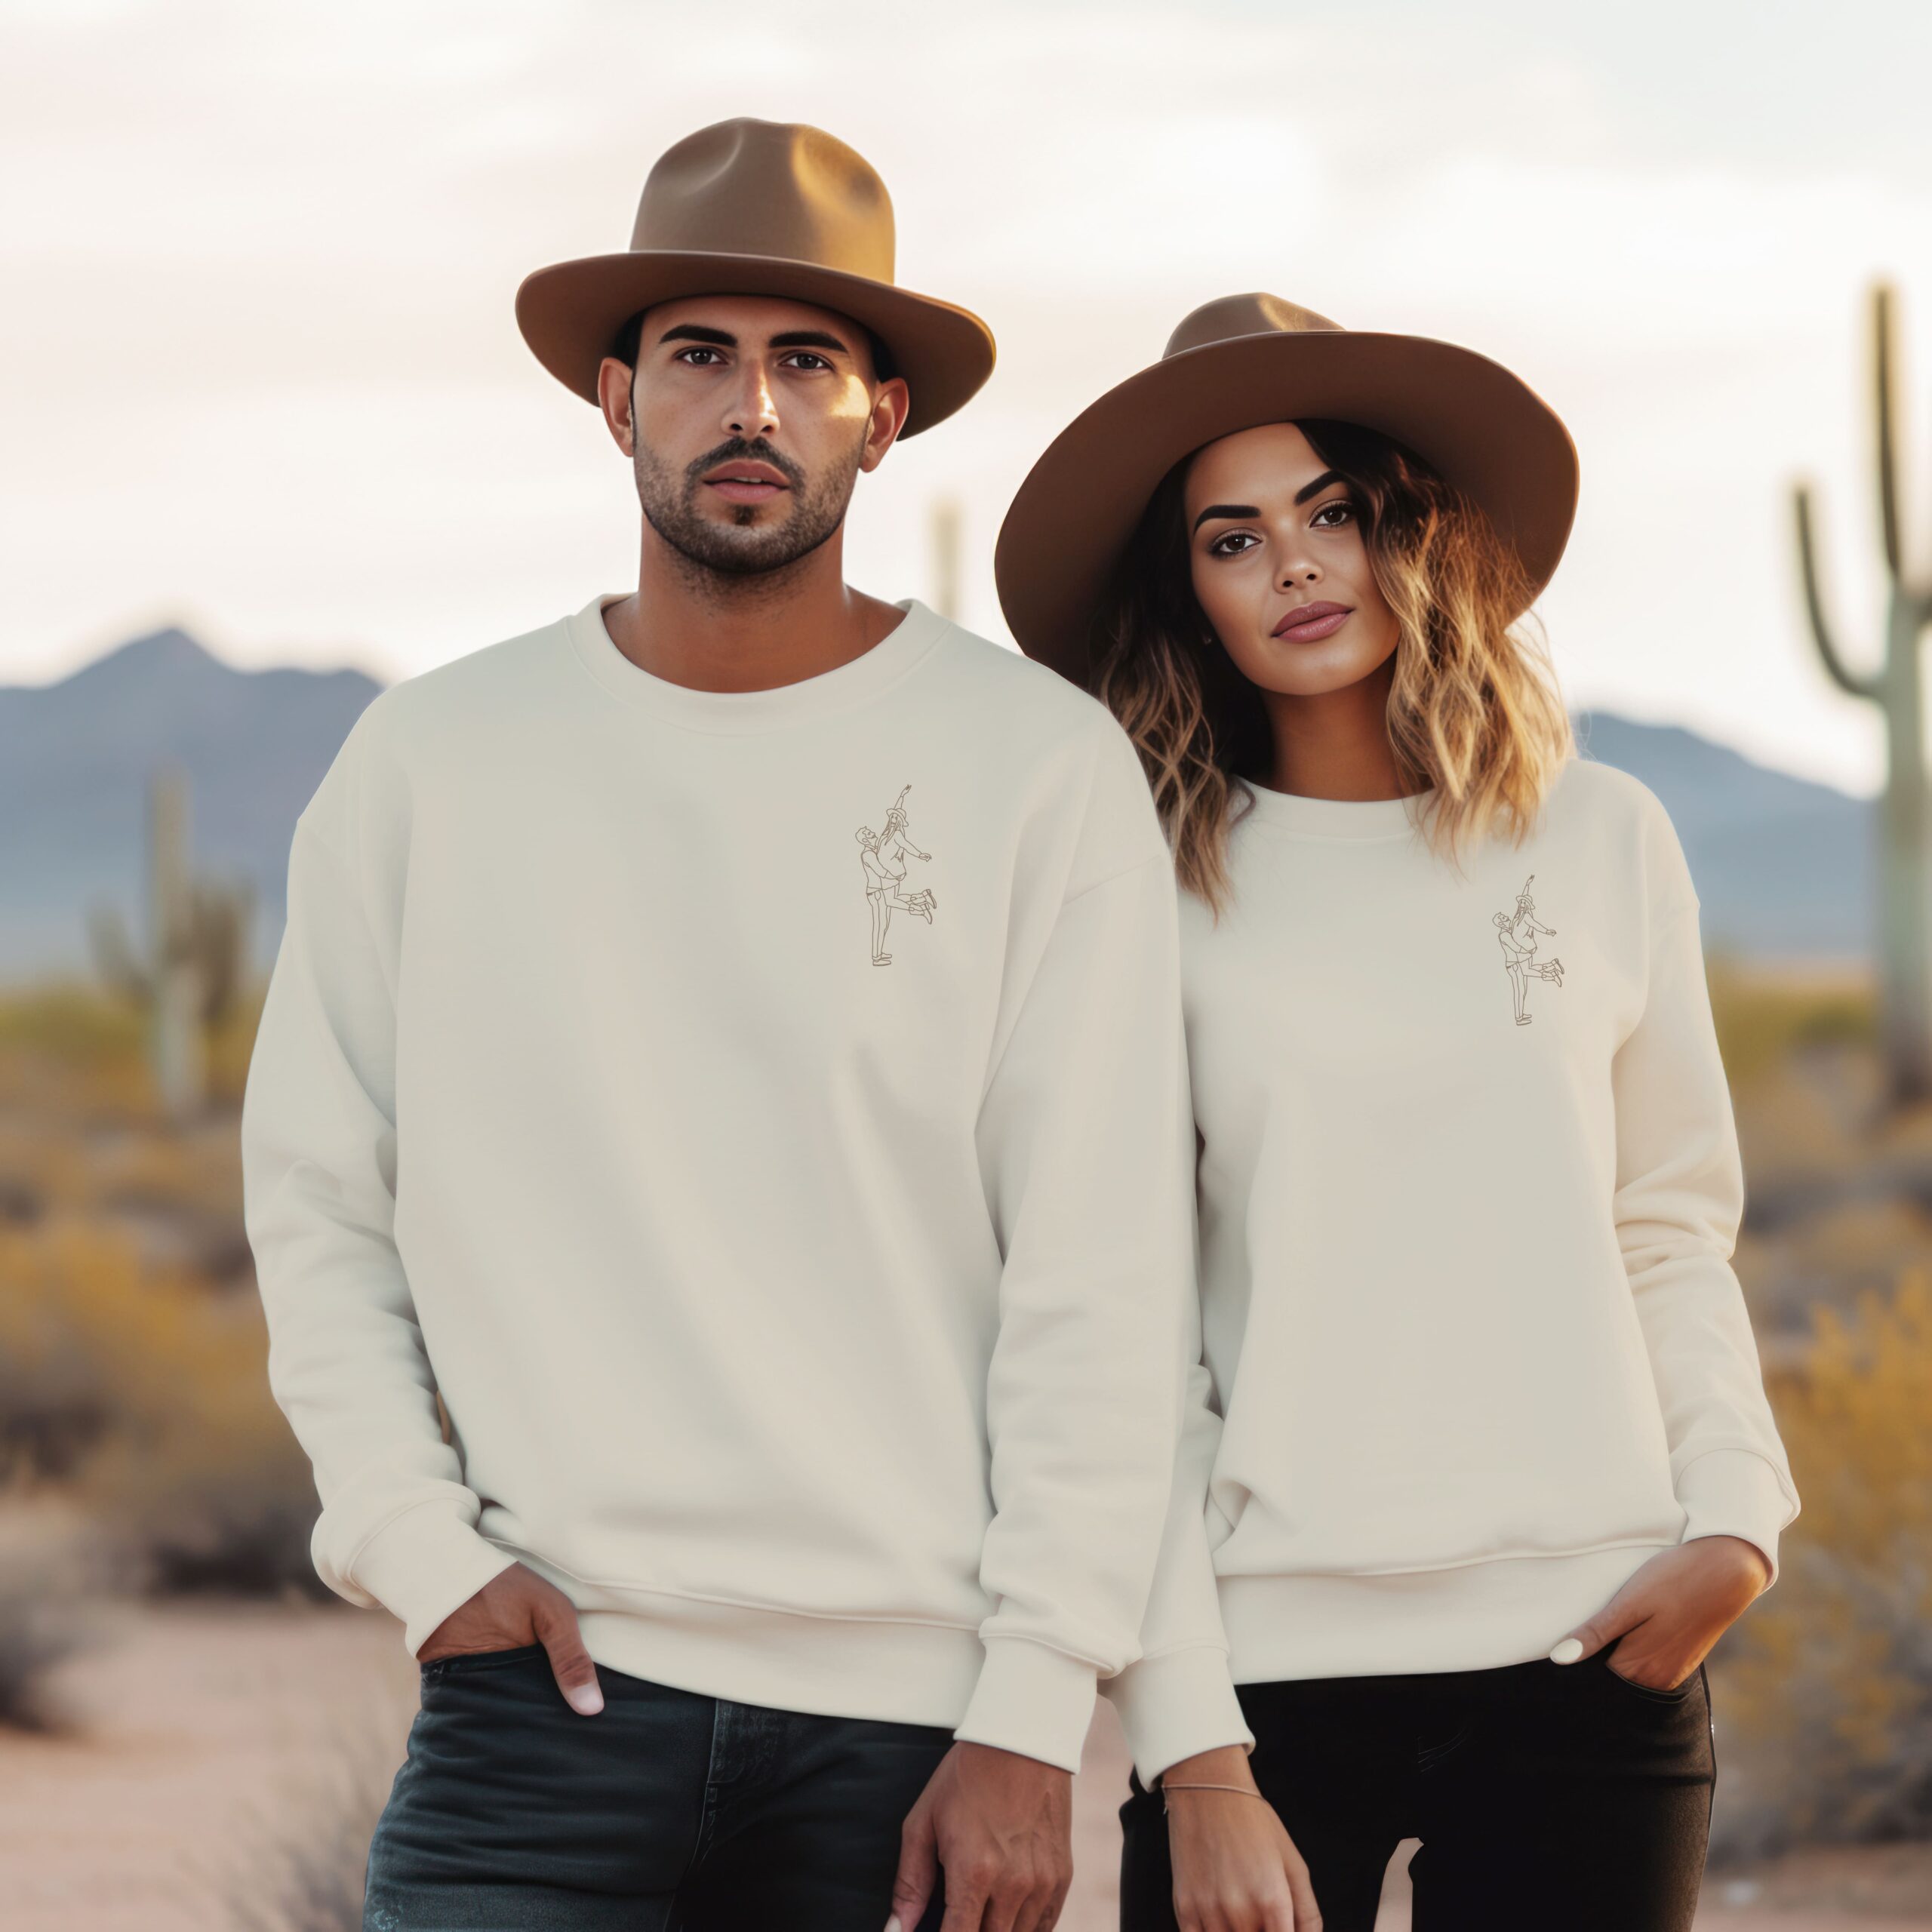 couple portrait sweatshirts matching line drawing from photo plus